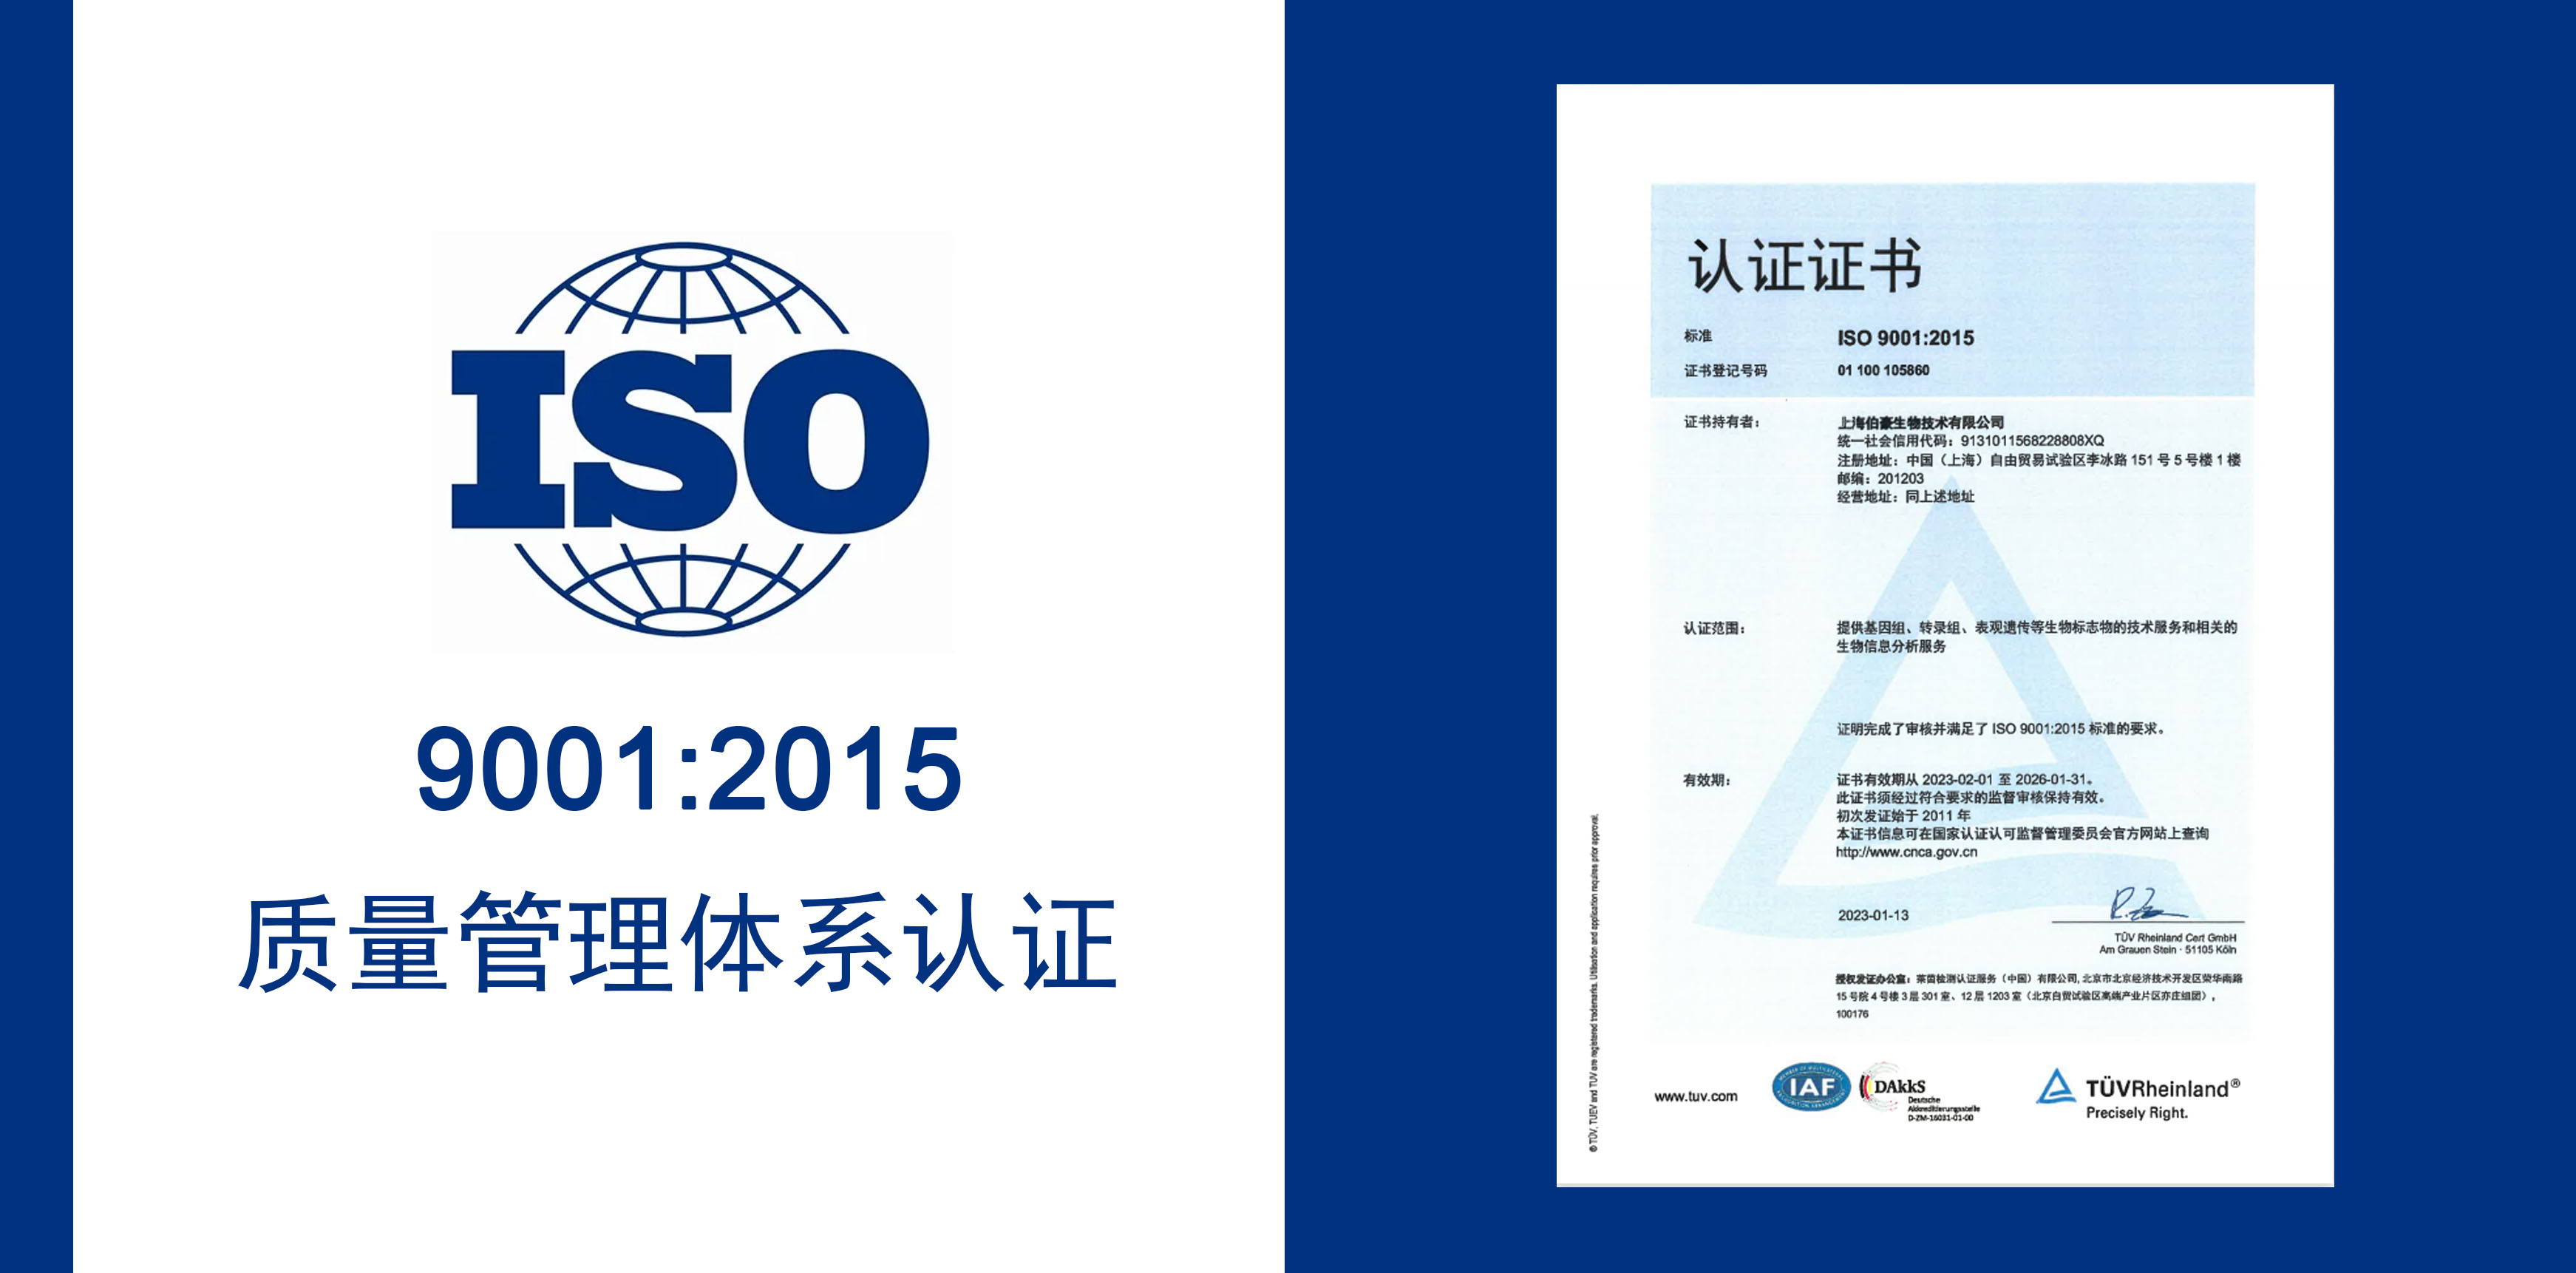 QY球友会生物获得 IOS9001 质量服务体系认证